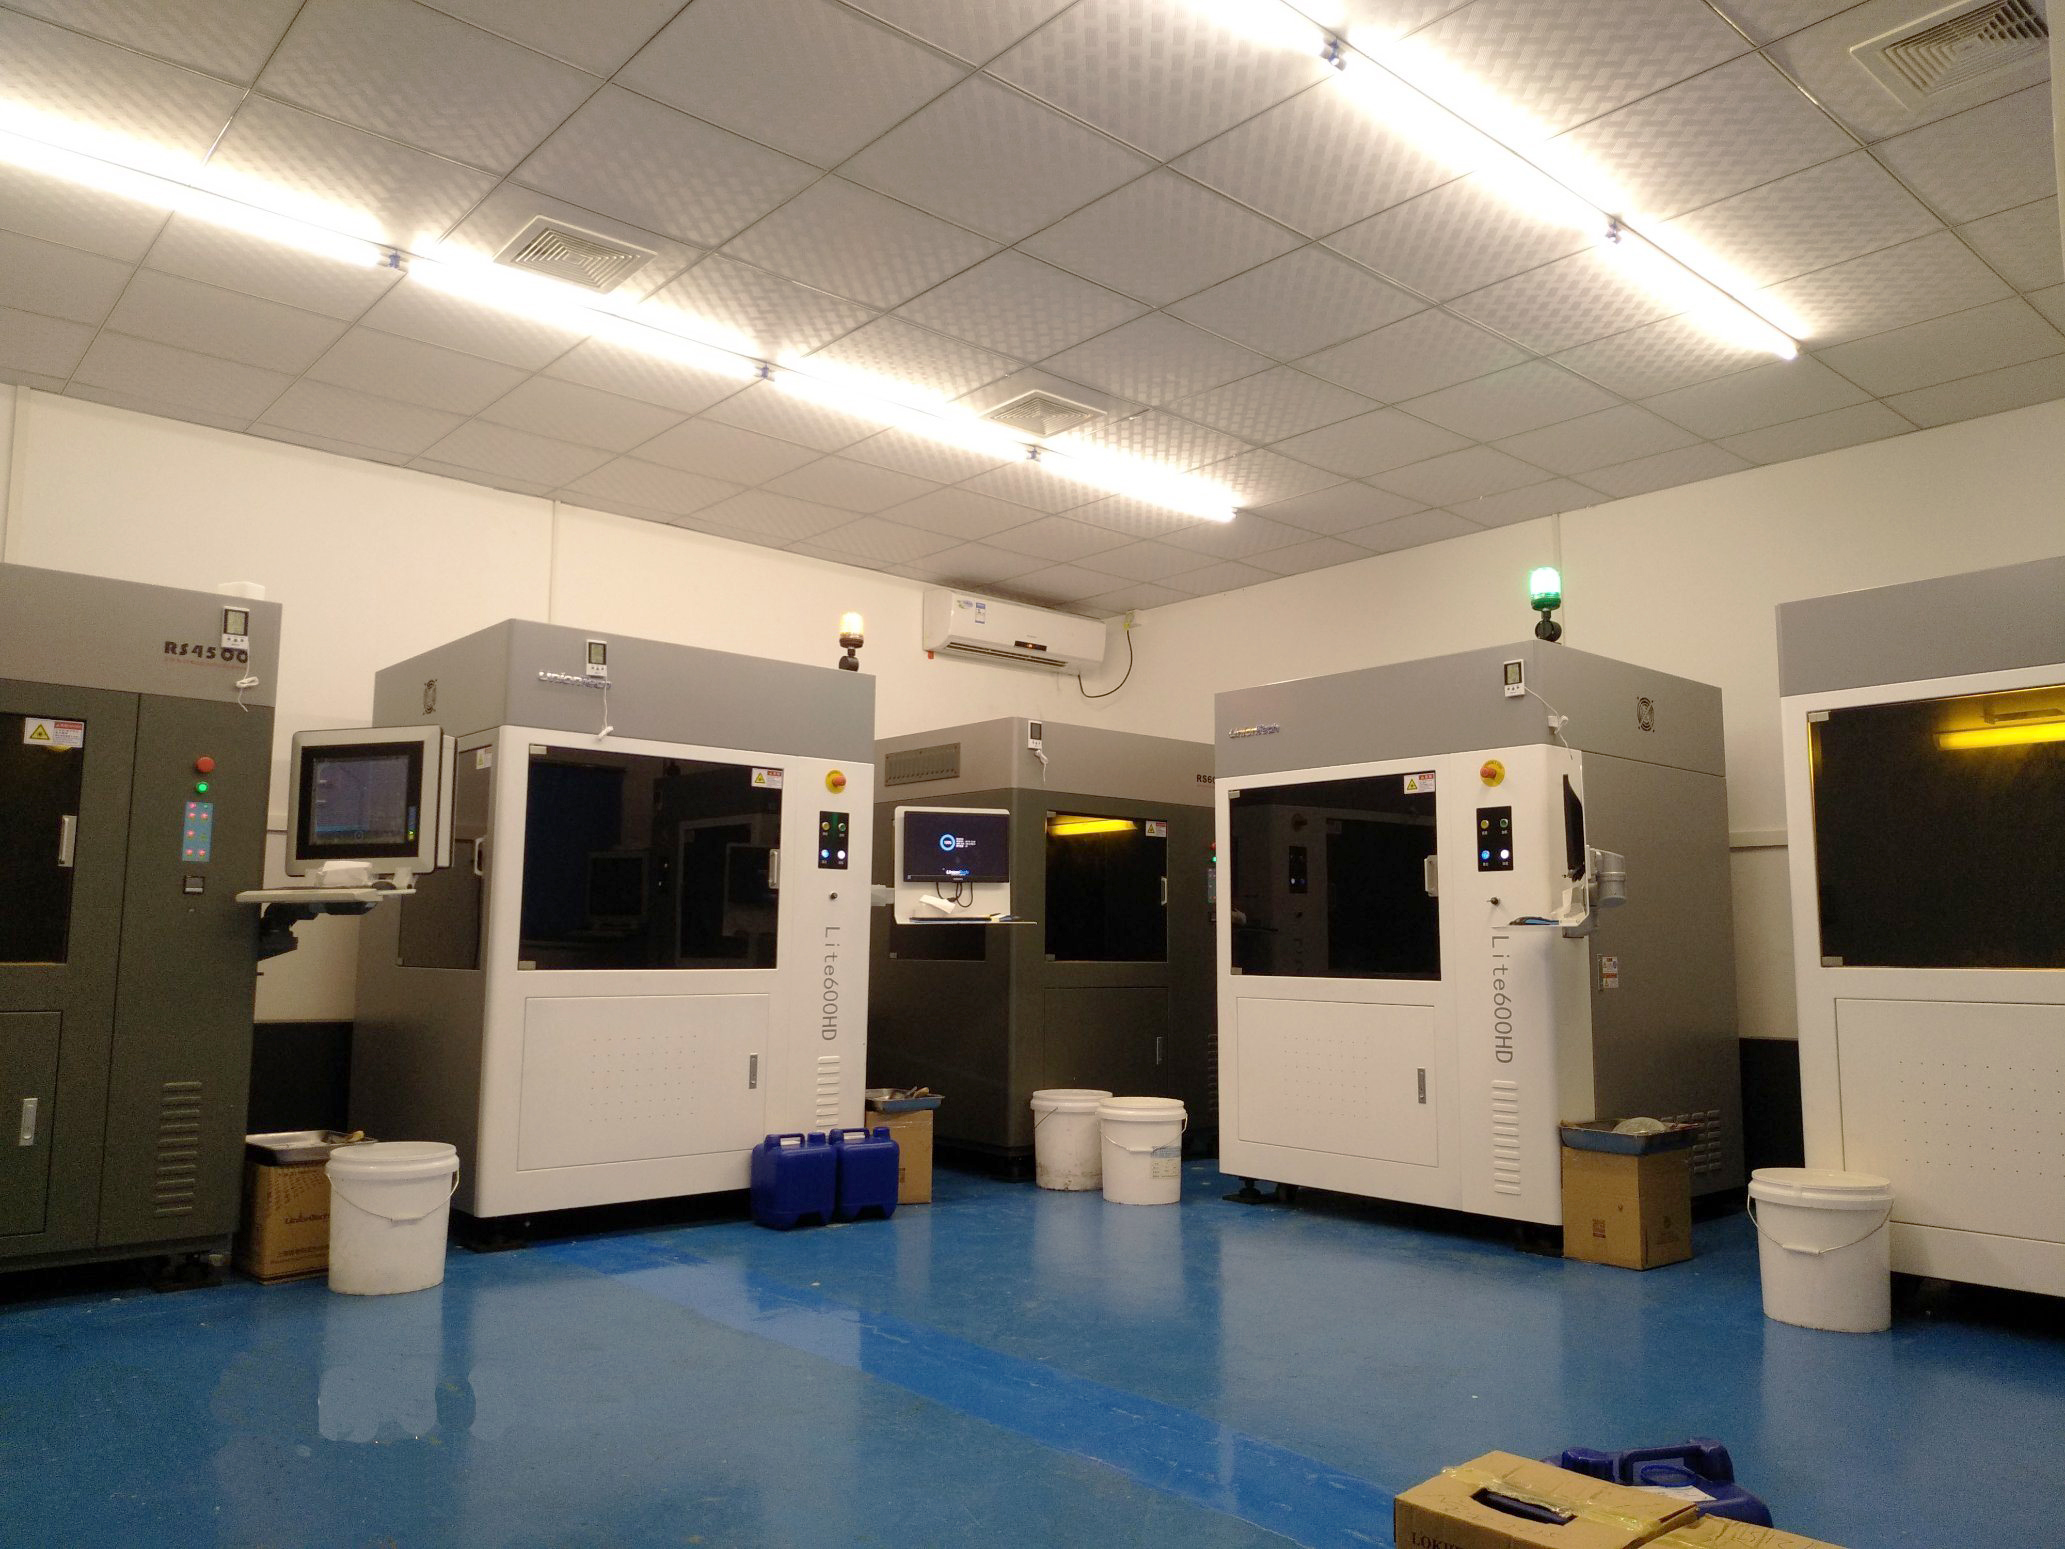 TS Prototypes provide SLA, SLS, SLM 3D printing services for worldwide customers.